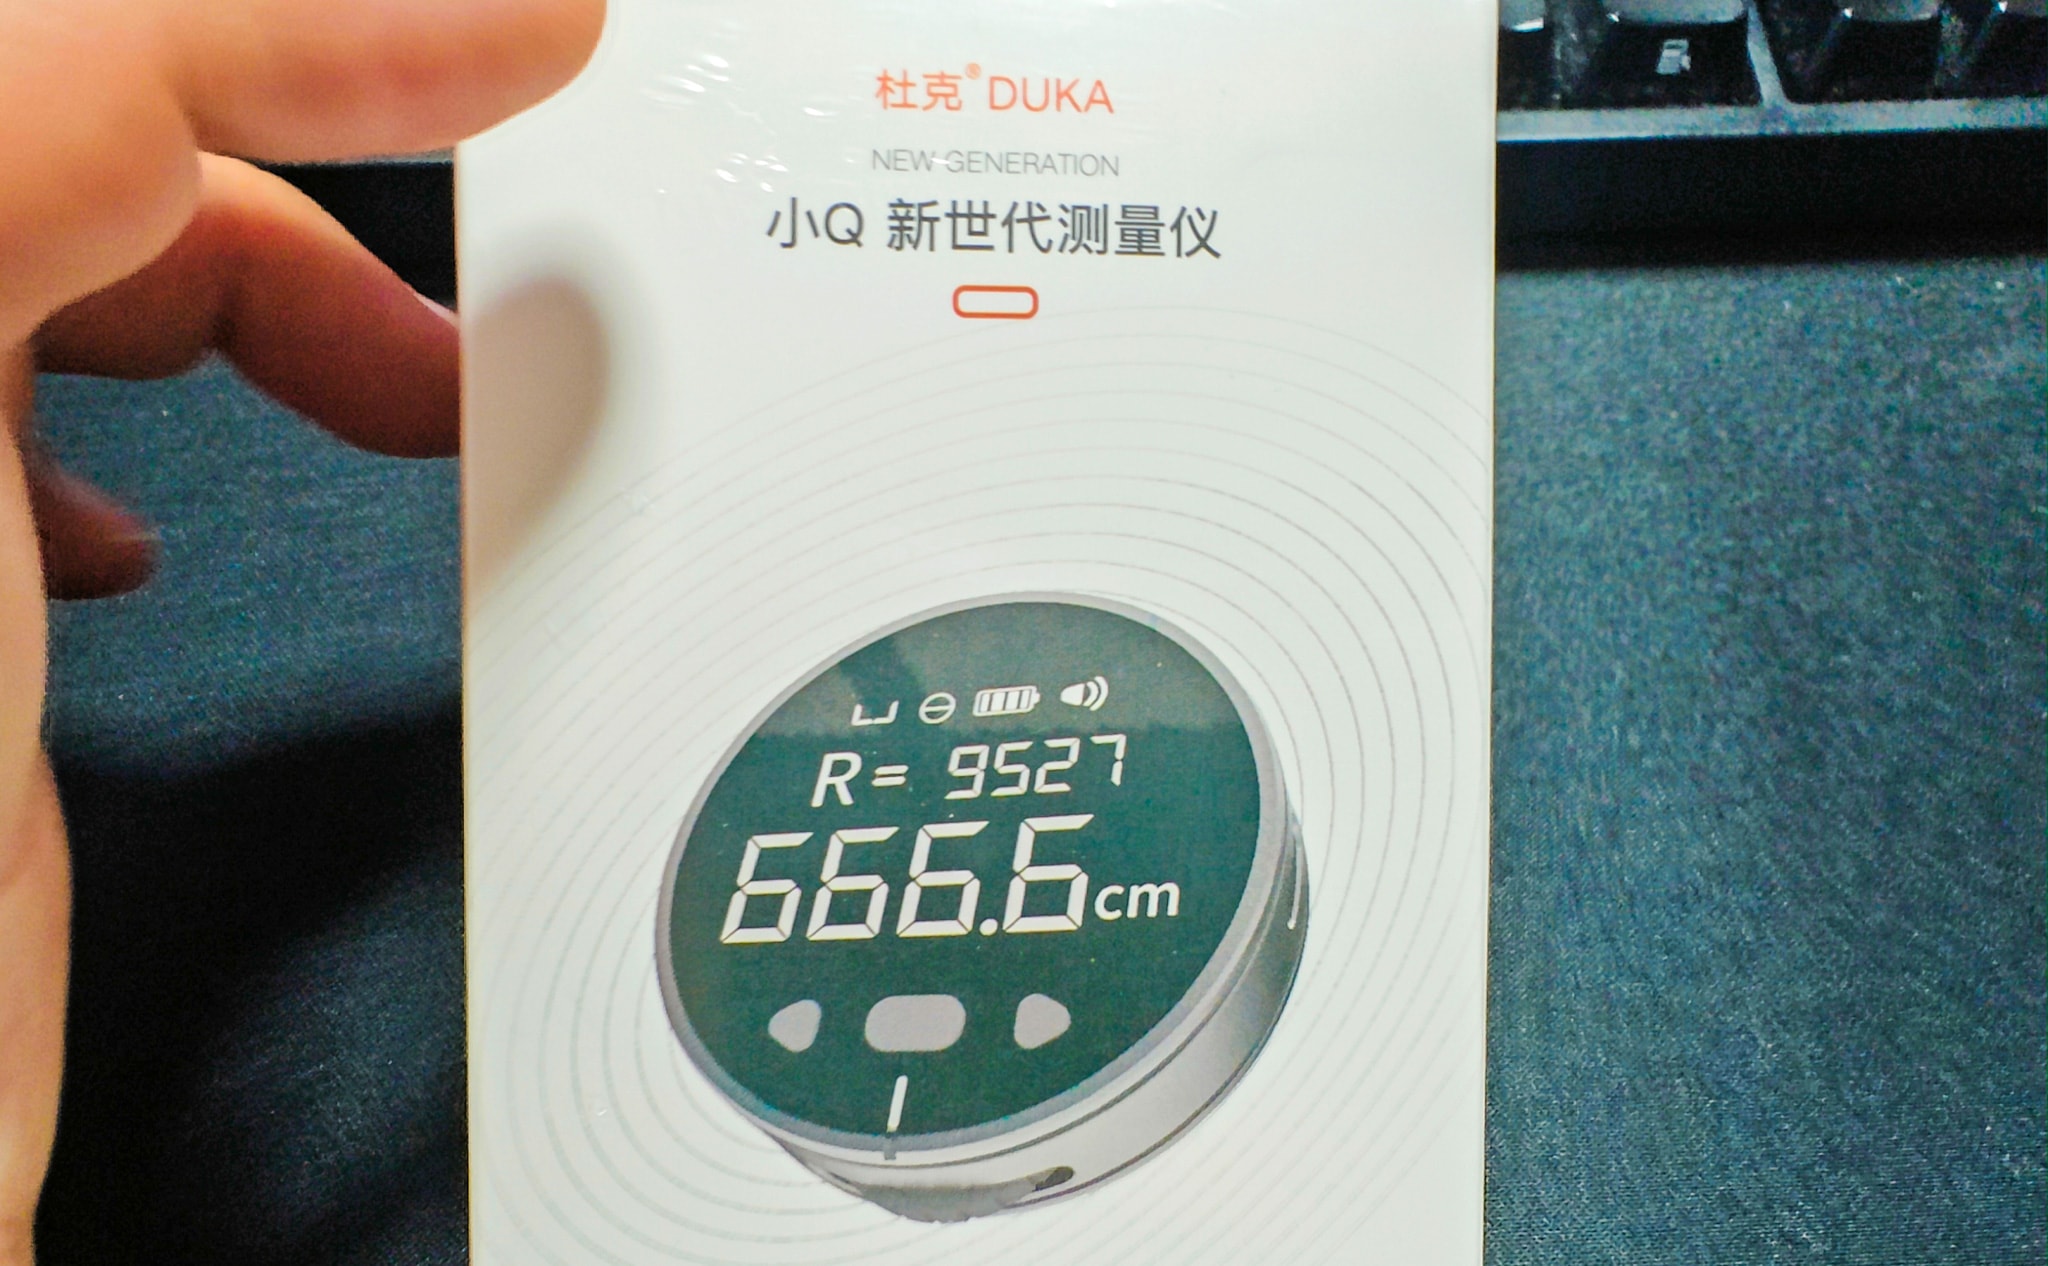 DUKA Small Q Electronic Rulerの外箱